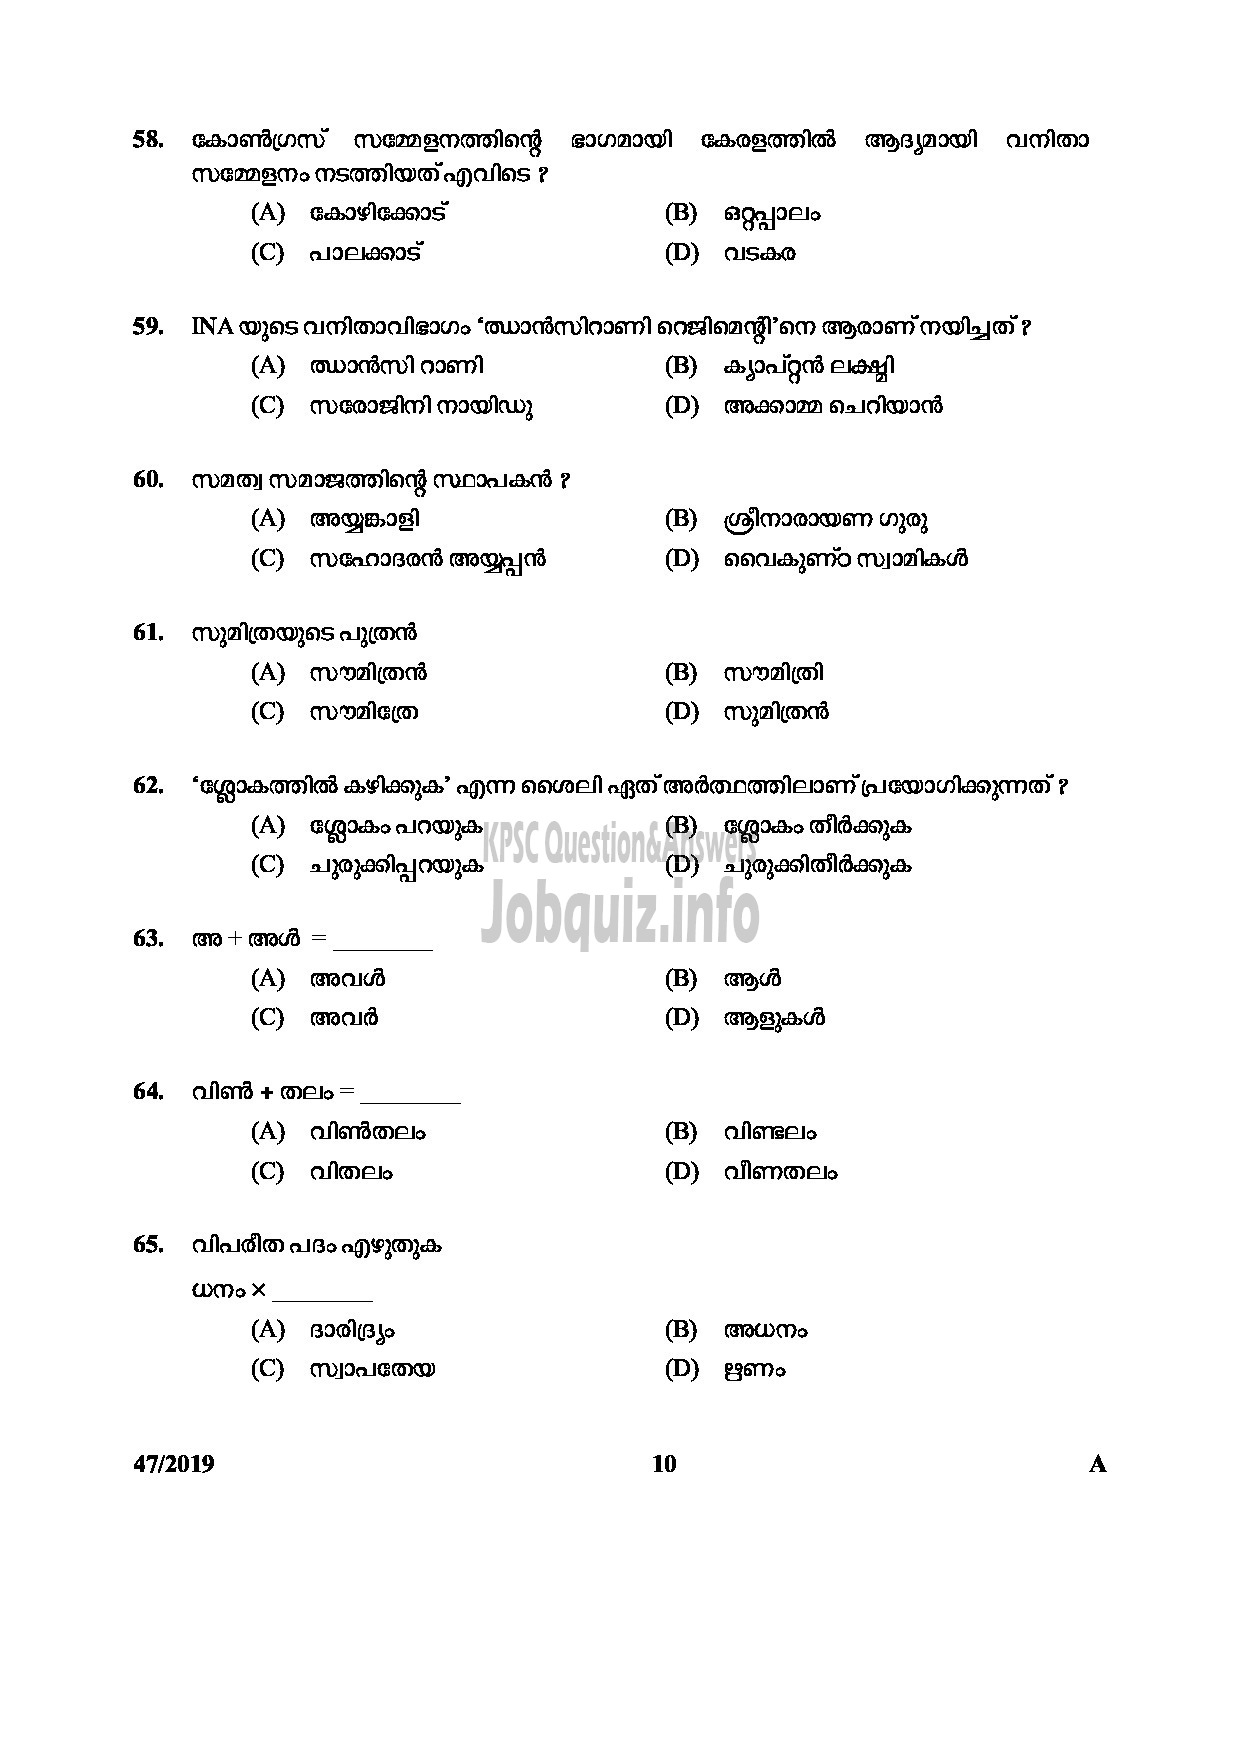 Kerala PSC Question Paper - LDC (TAMIL & MALAYALAM KNOWING) VARIOUS DEPARTMENTS English / Malayalam / Tamil-10